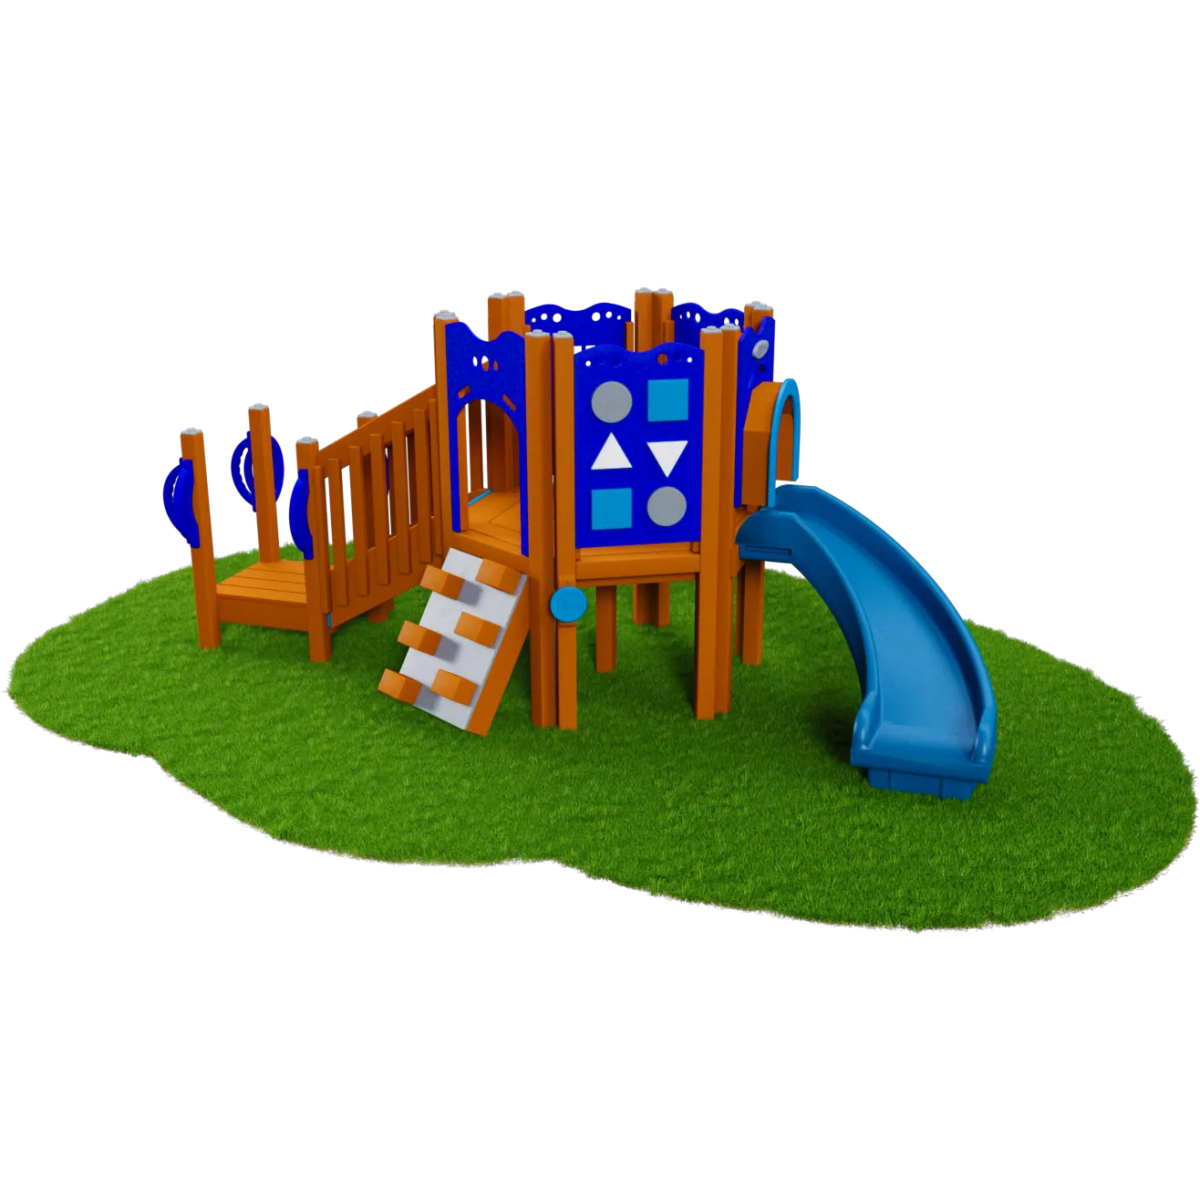 Summit Playset - Toddler Playgrounds - Playtopia, Inc.